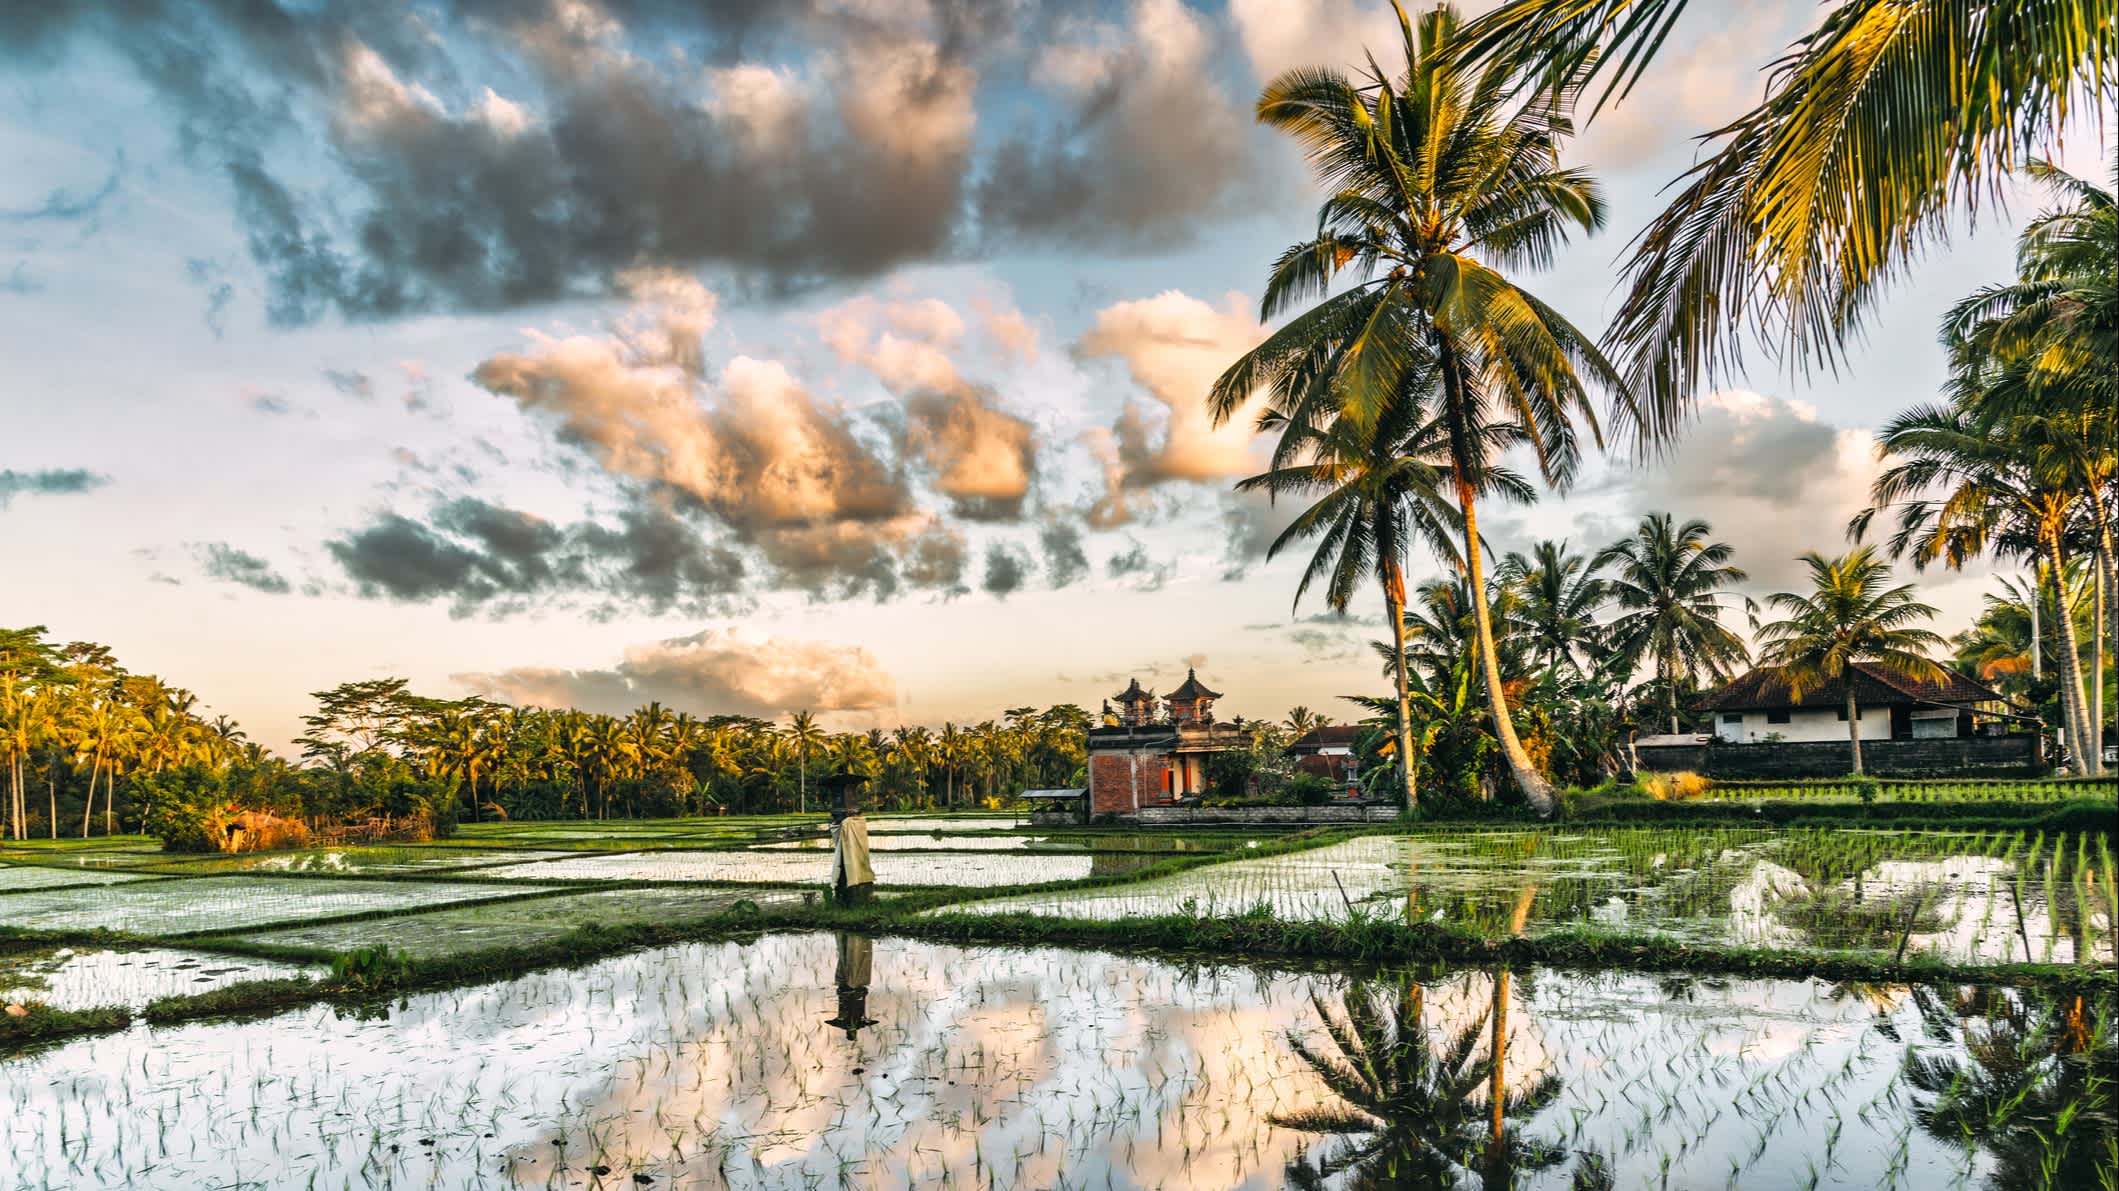 Sonnenuntergang über Reisfeldern in Bali, Indonesien.